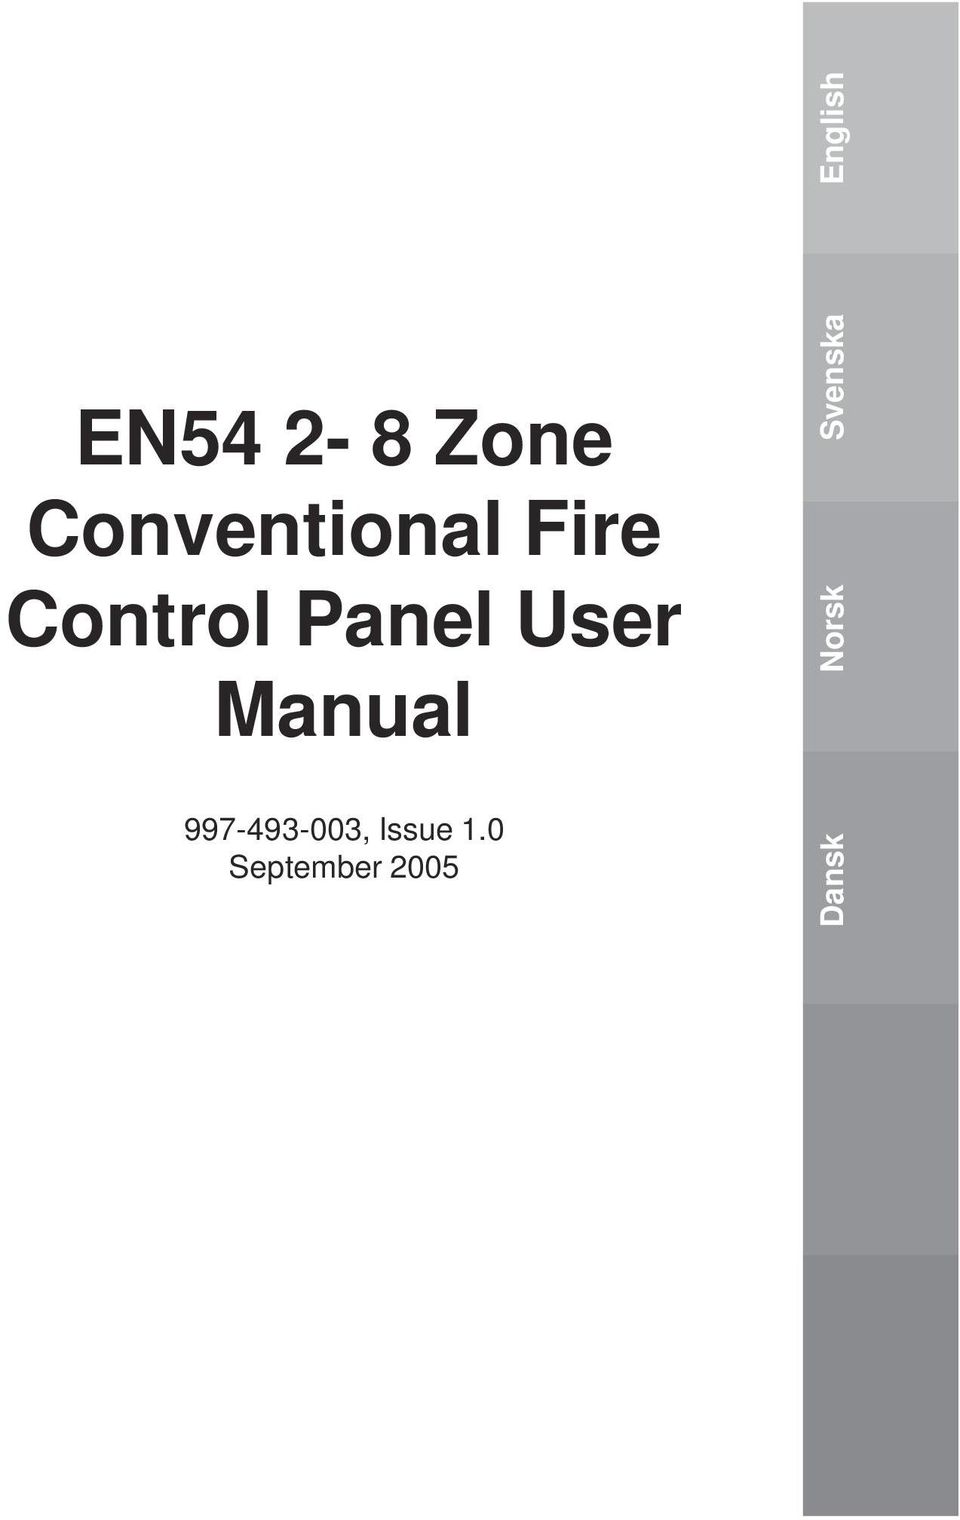 Control Panel User Manual